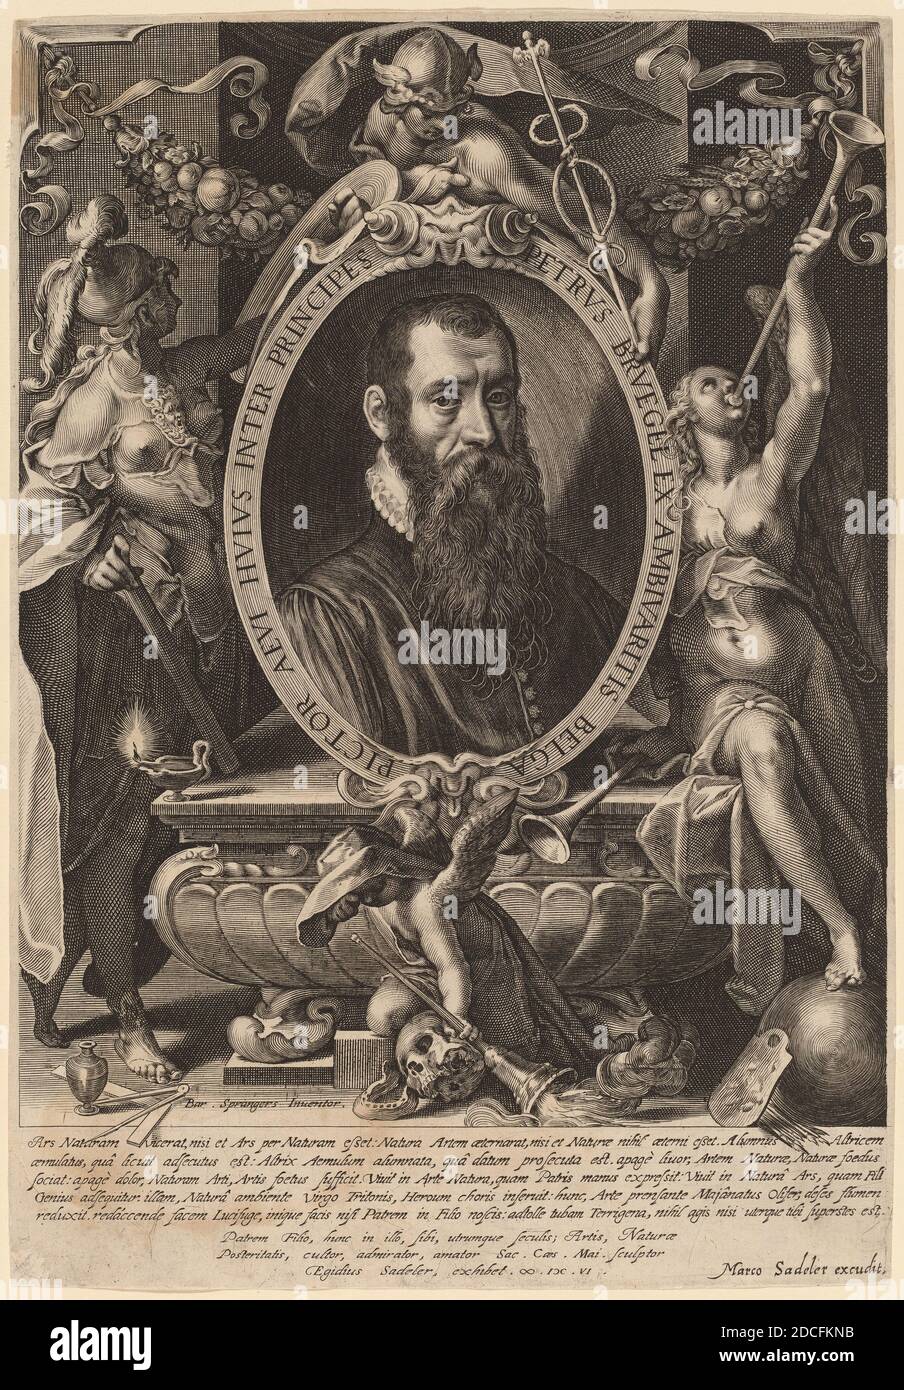 Aegidius Sadeler II, (artiste), Flamand, c. 1570 - 1629, Bartholomaeus Spranger, (artiste d'après), Flamand, 1546 - 1611, Pieter Brueghel, le plus jeune, 1606, gravure Banque D'Images